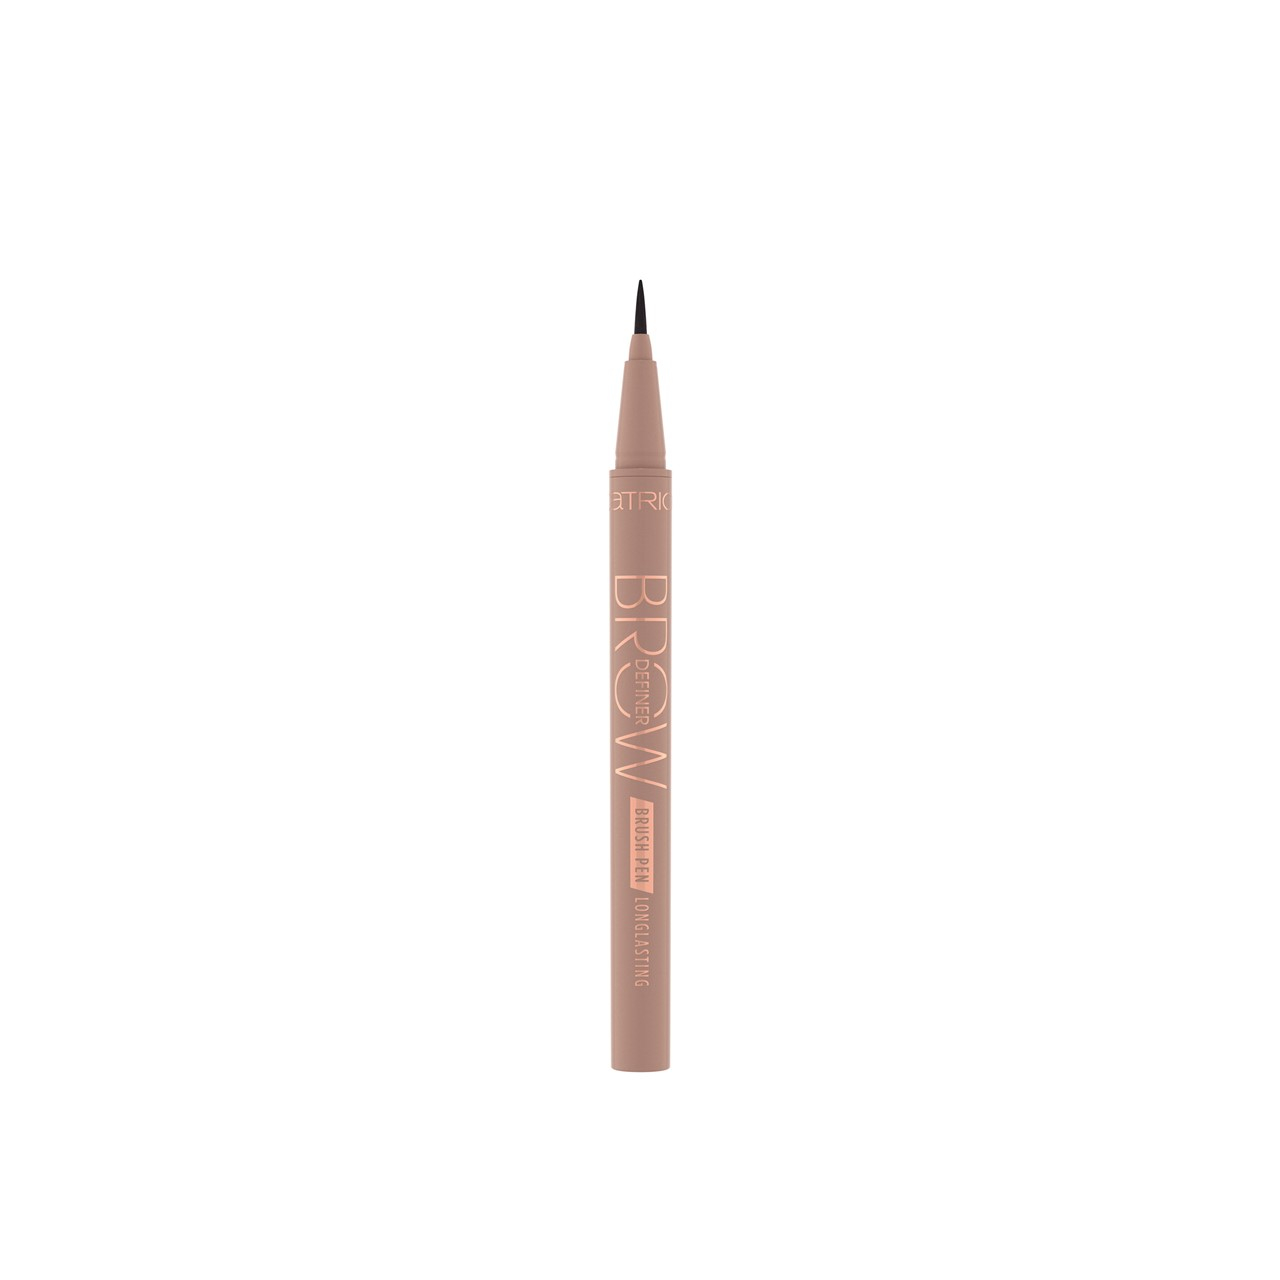 Catrice Brow Definer Brush Pen Longlasting 010 Dark Blonde 0.7ml (0.02fl oz)